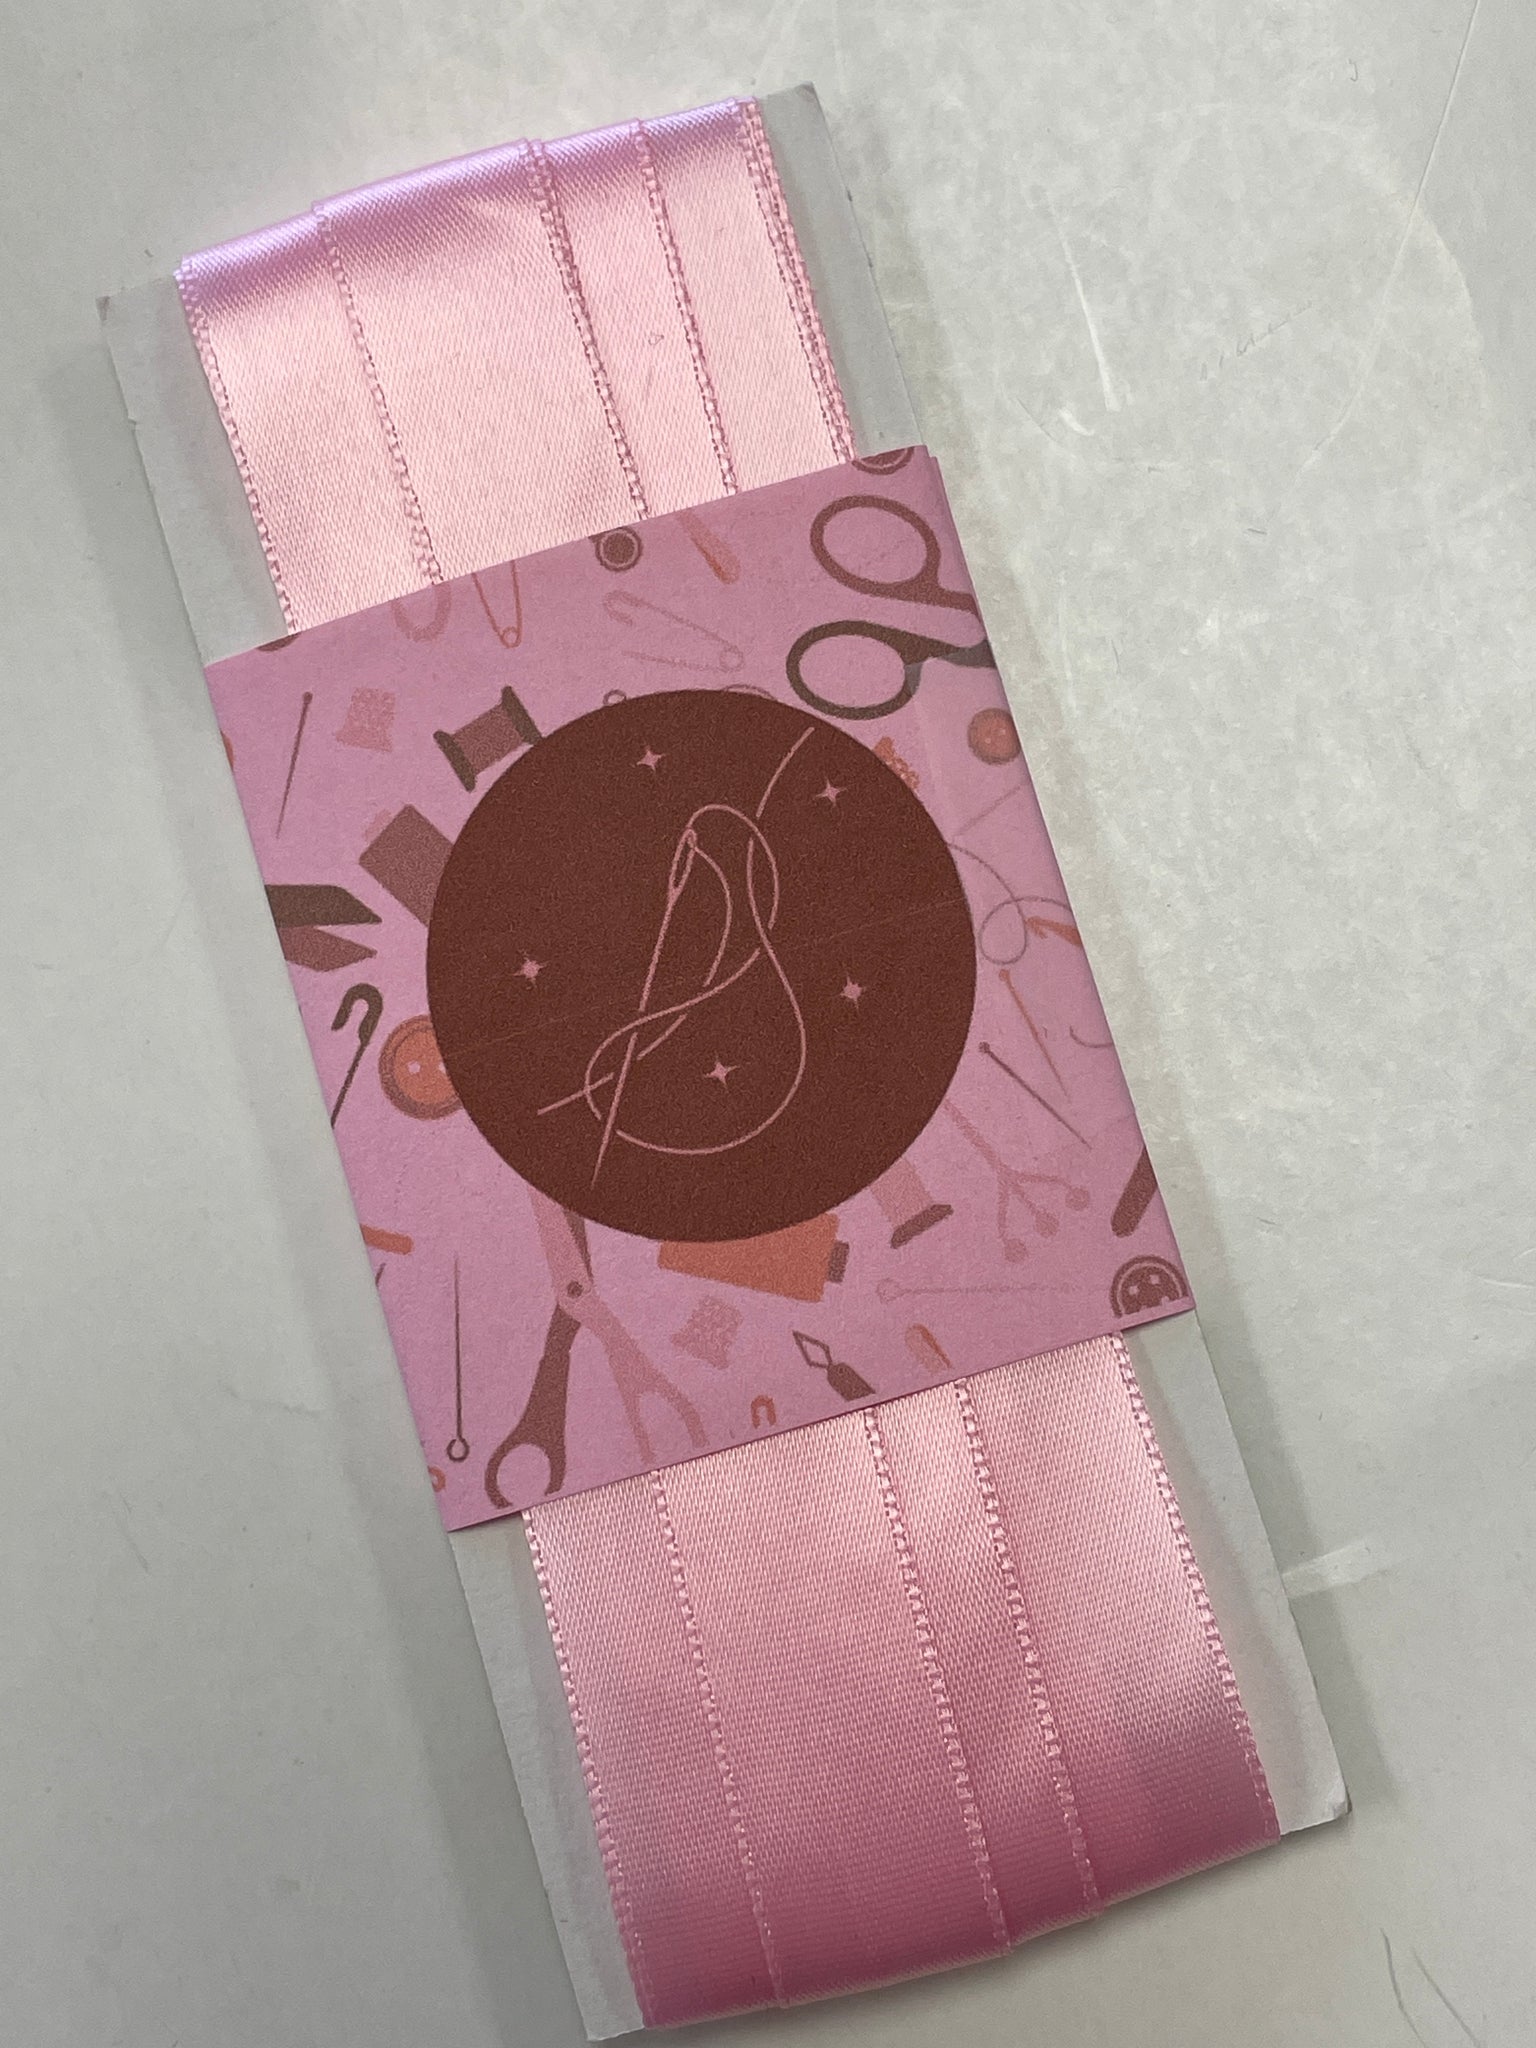 4 3/8 YD Polyester Satin Ribbon - Pink